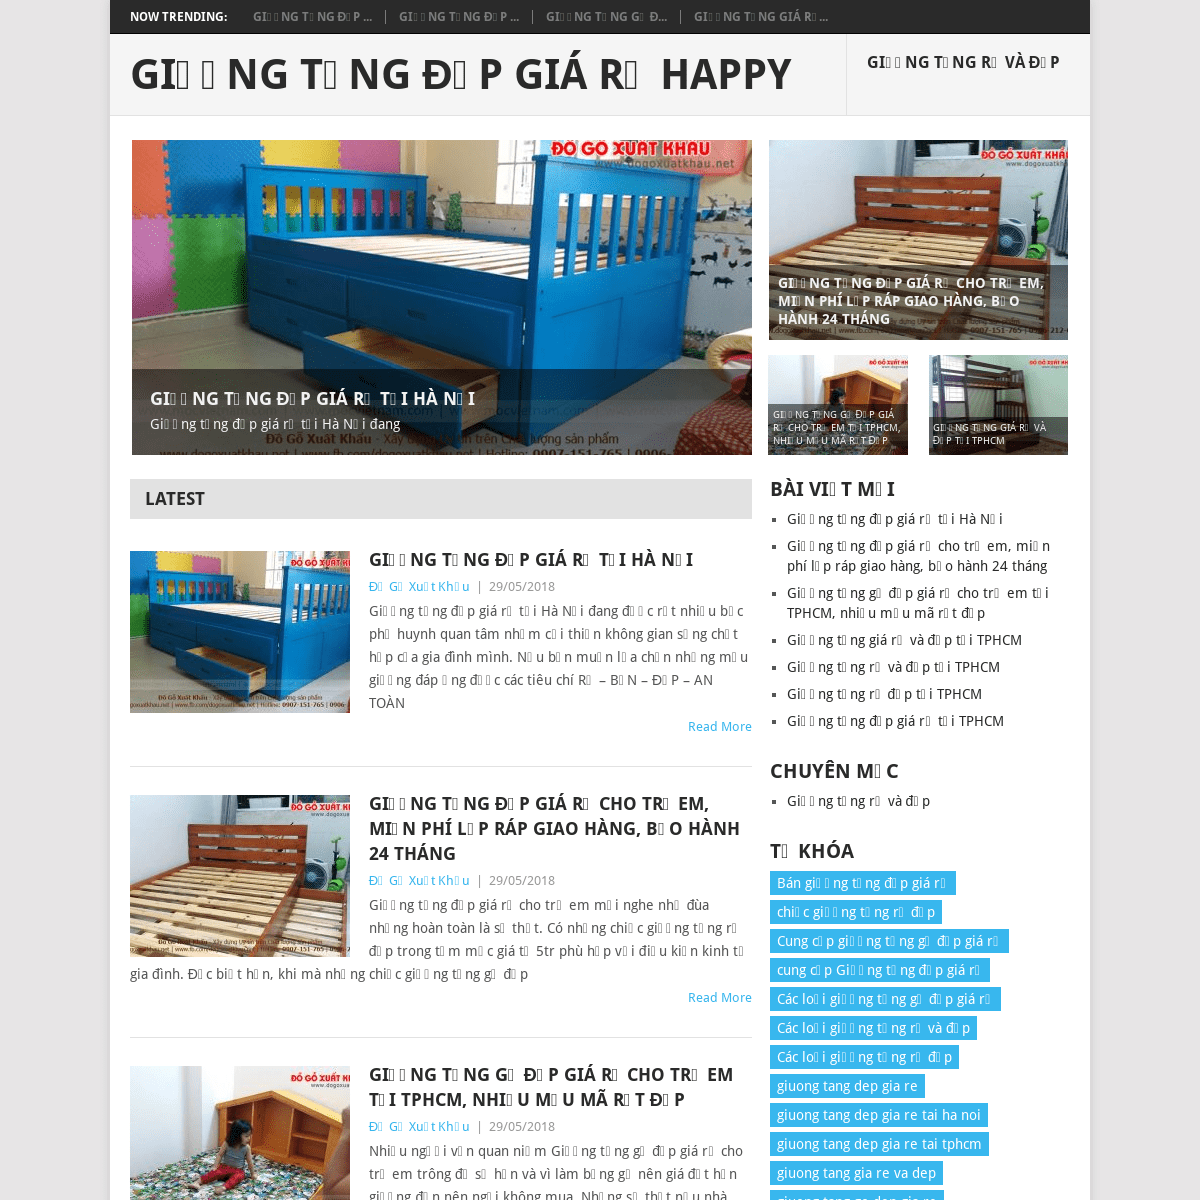 A complete backup of giuongtangdepgiare.com